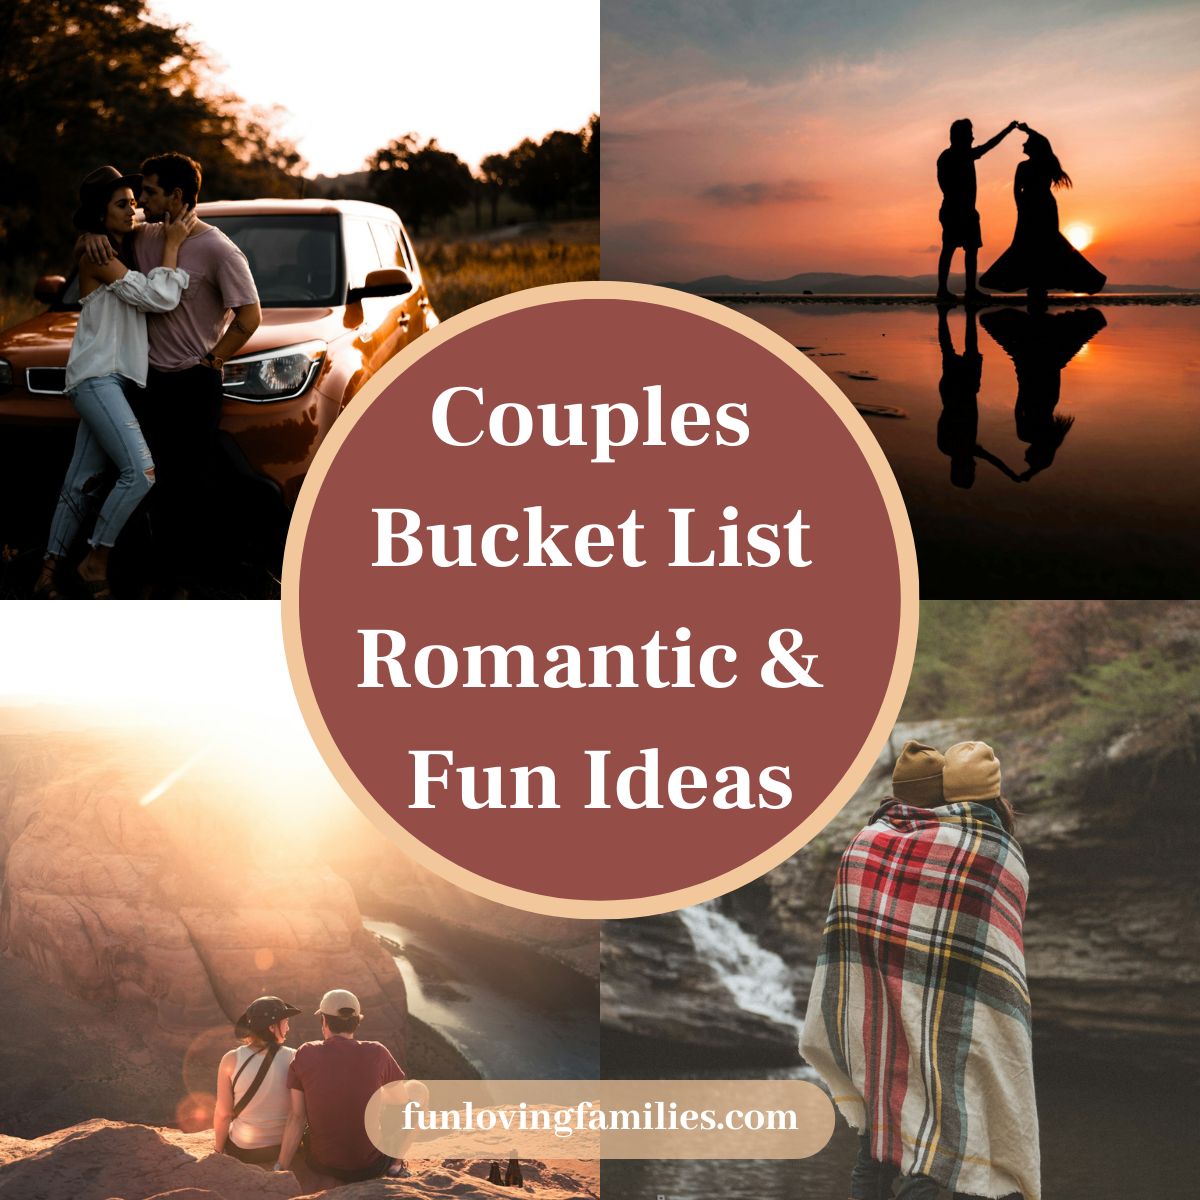 Bucket List for Couples: 31 Fun & Romantic Ideas